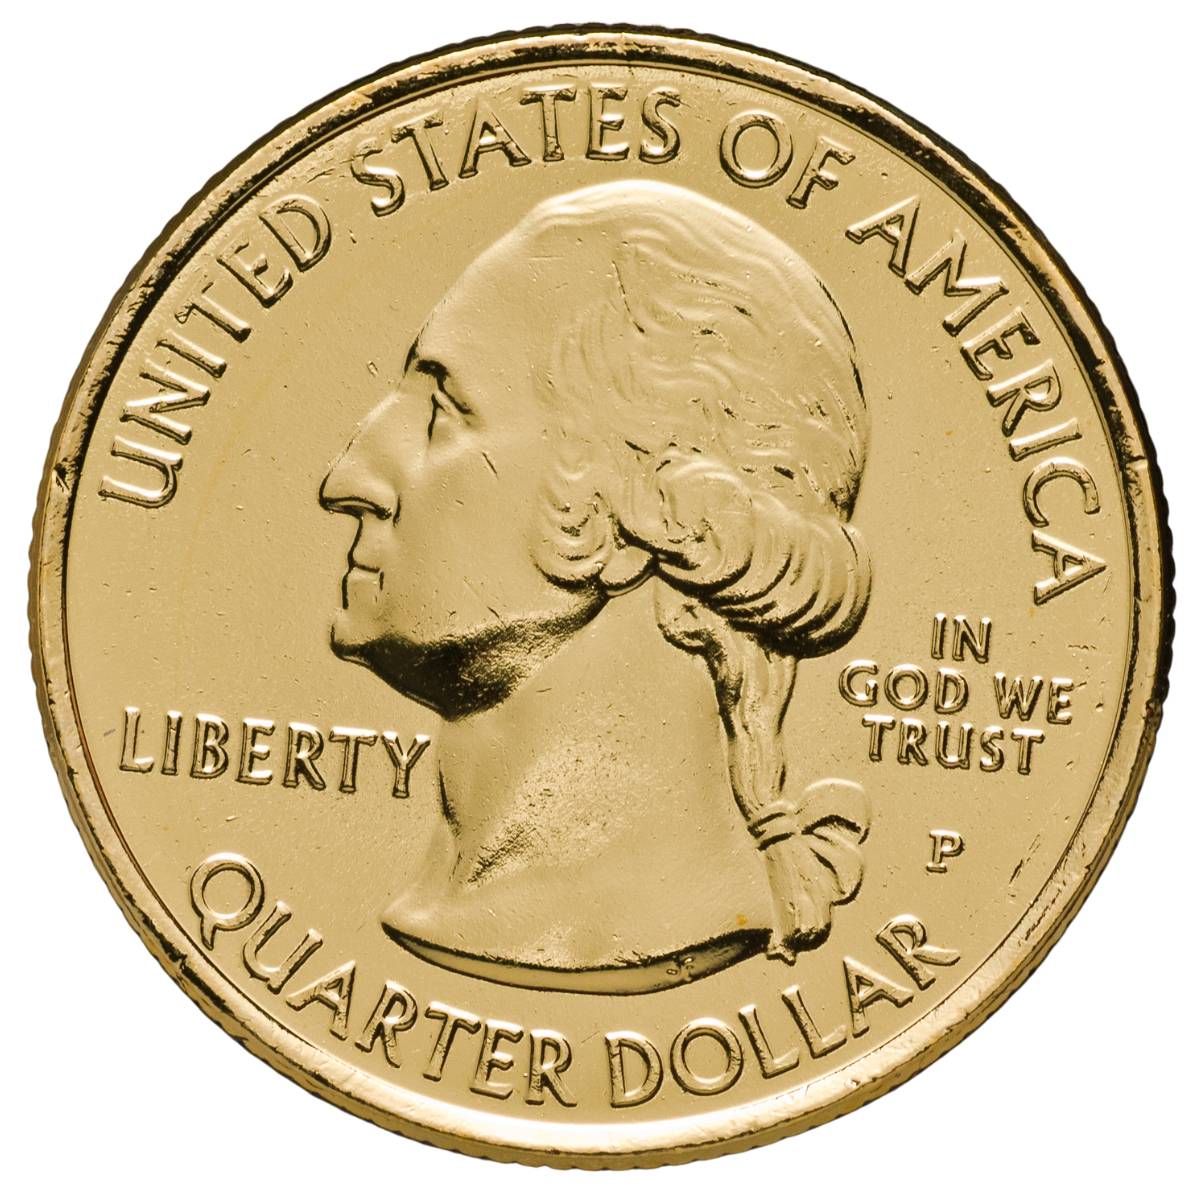 America the Beautiful 2010 Quarter Yosemite Gold-plated Coin